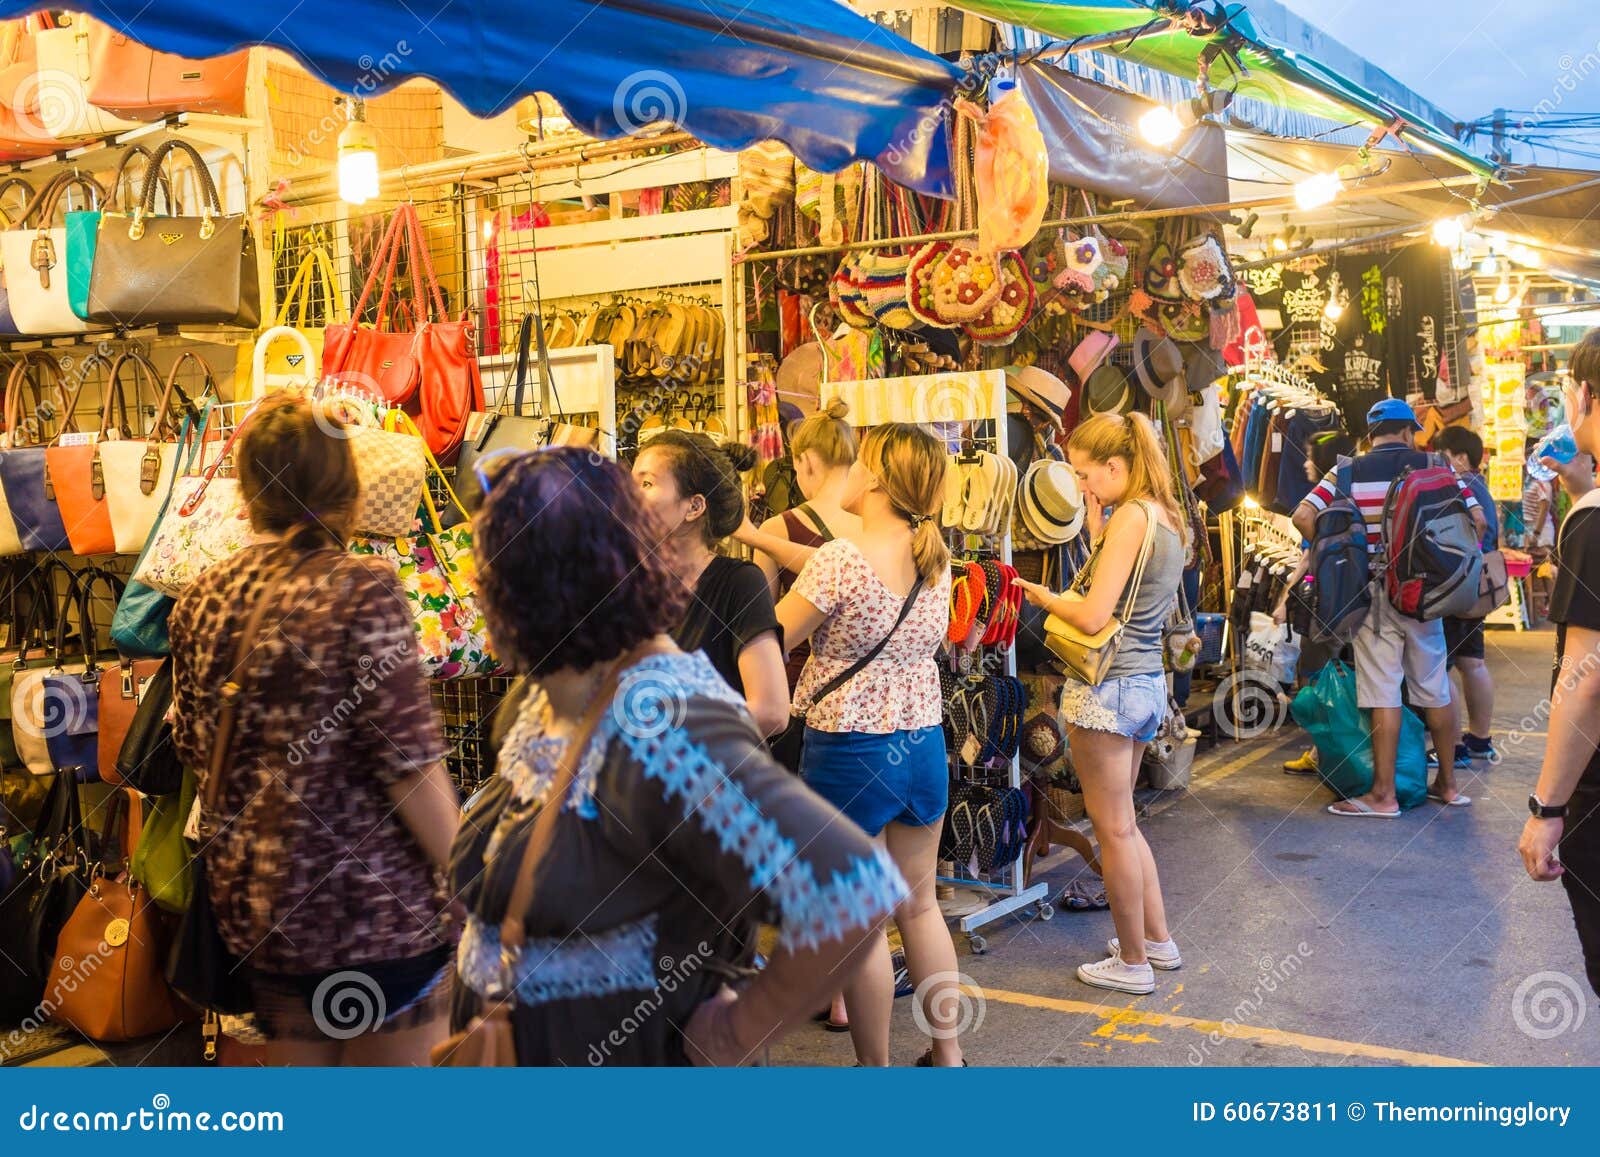 BANGKOK, Chatuchak Weekend Market, How-to